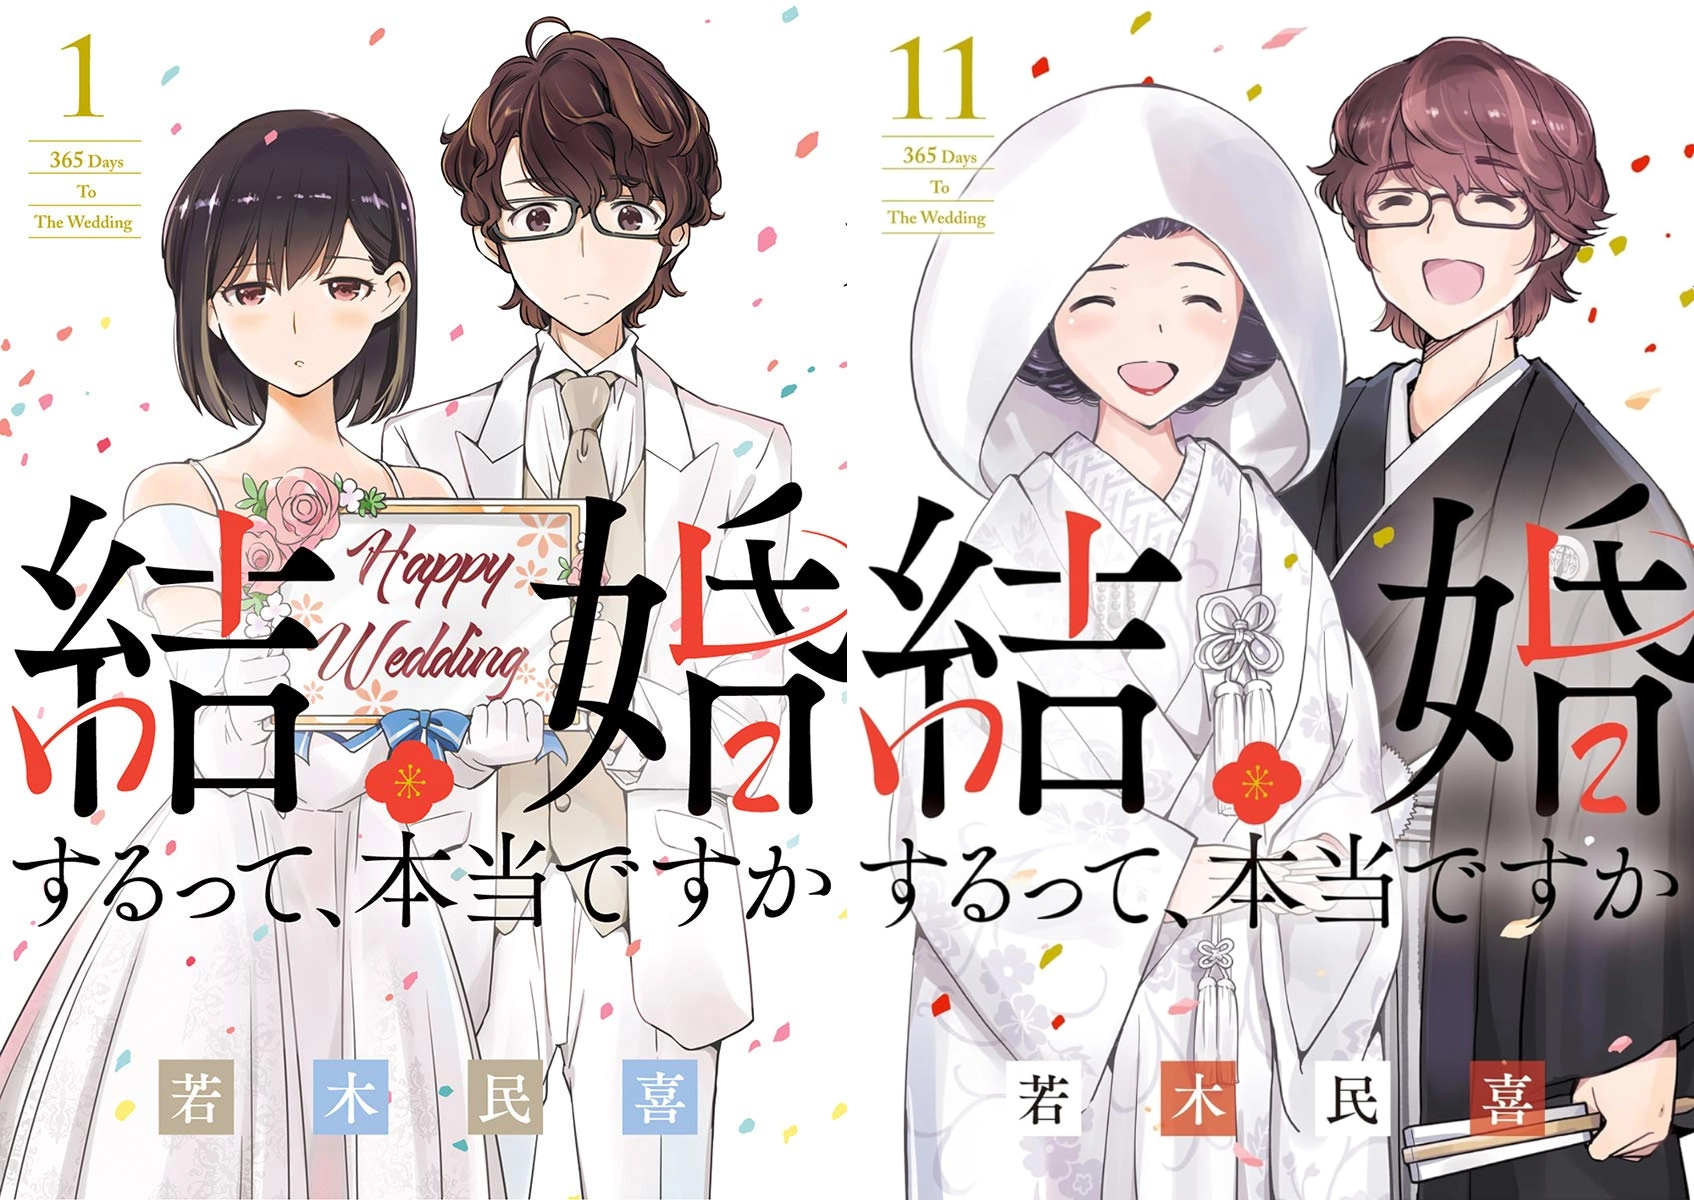 365 Days to the Wedding manga